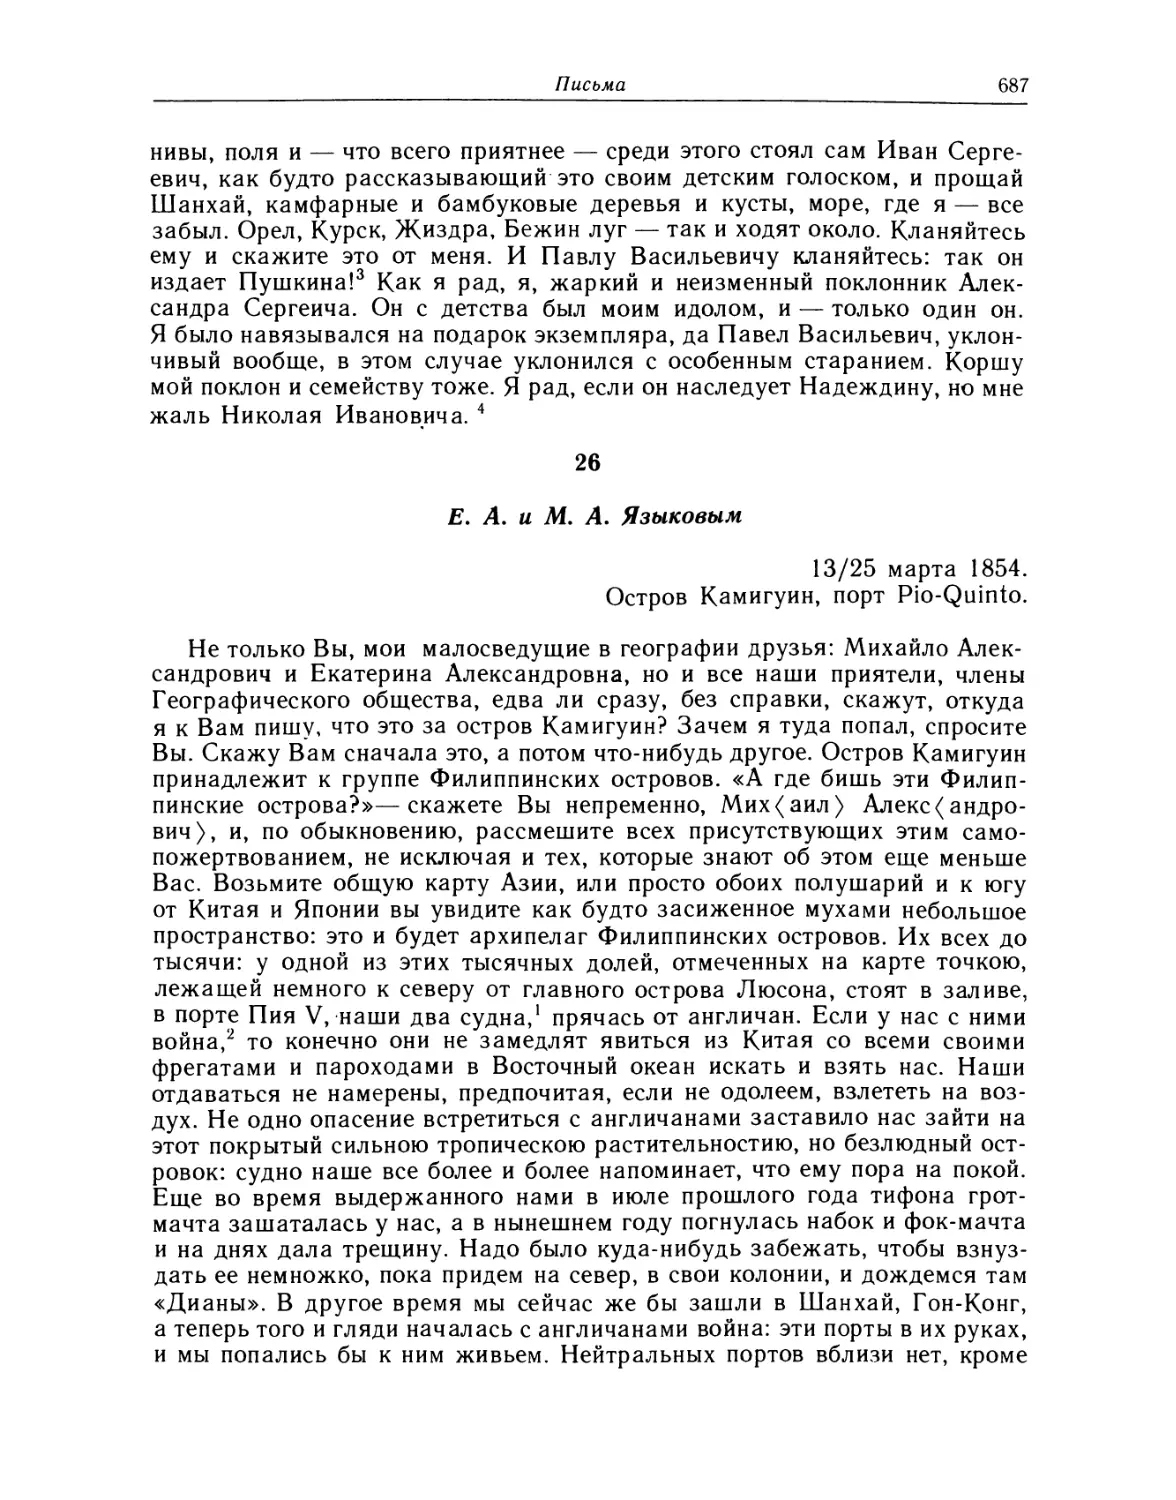 26. Е. А. и М. А. Языковым. 13/25 марта 1854 г.